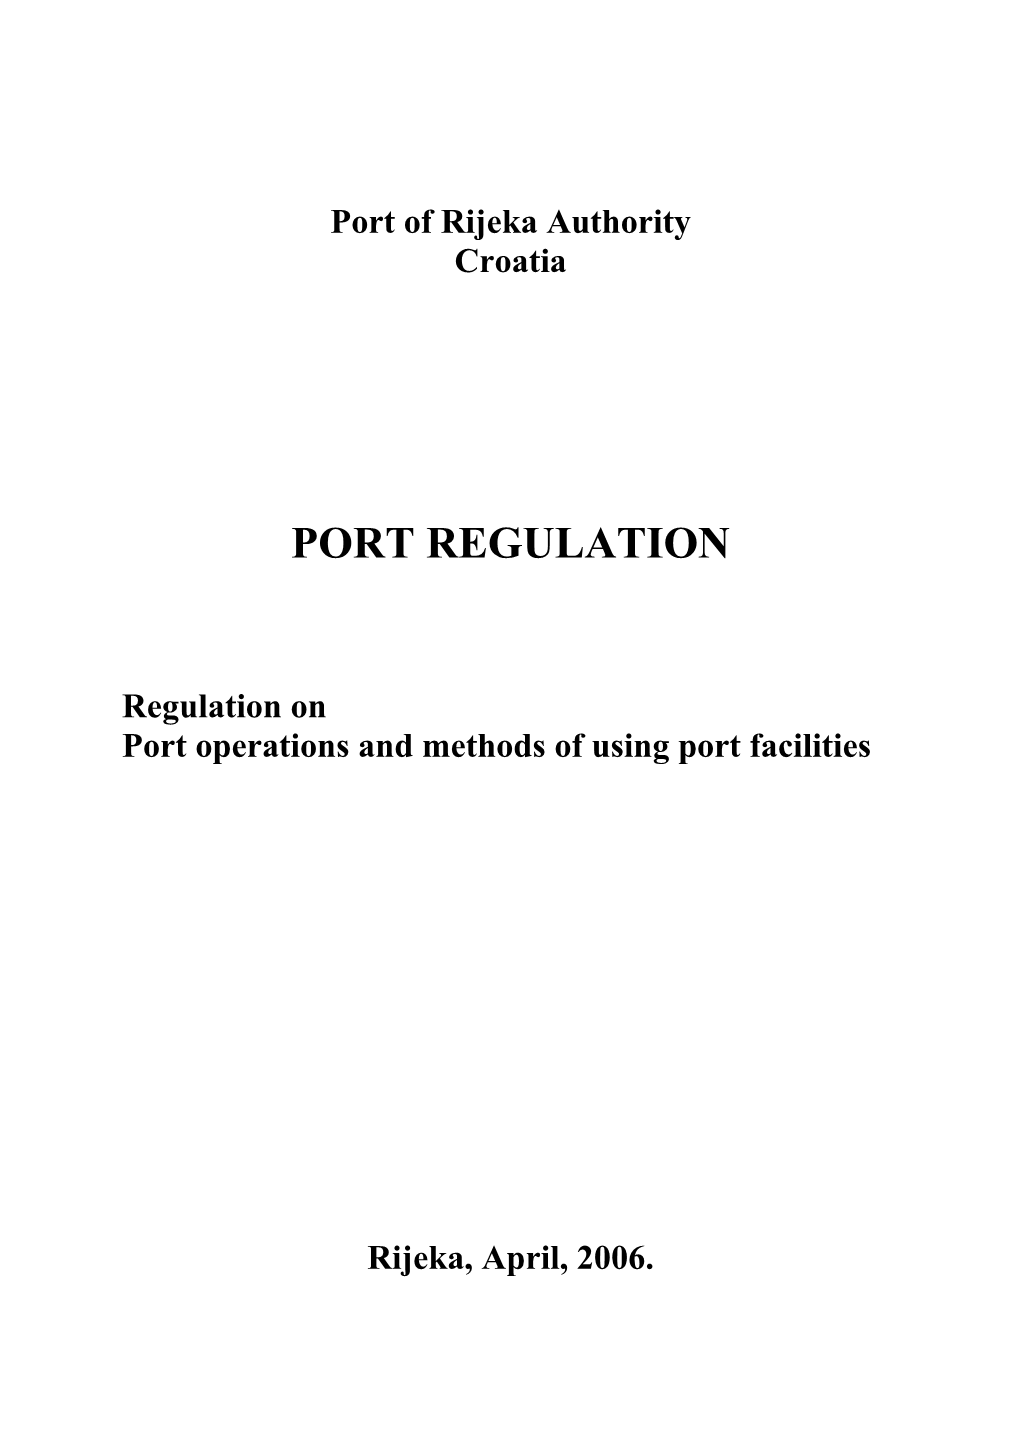 Port Regulation